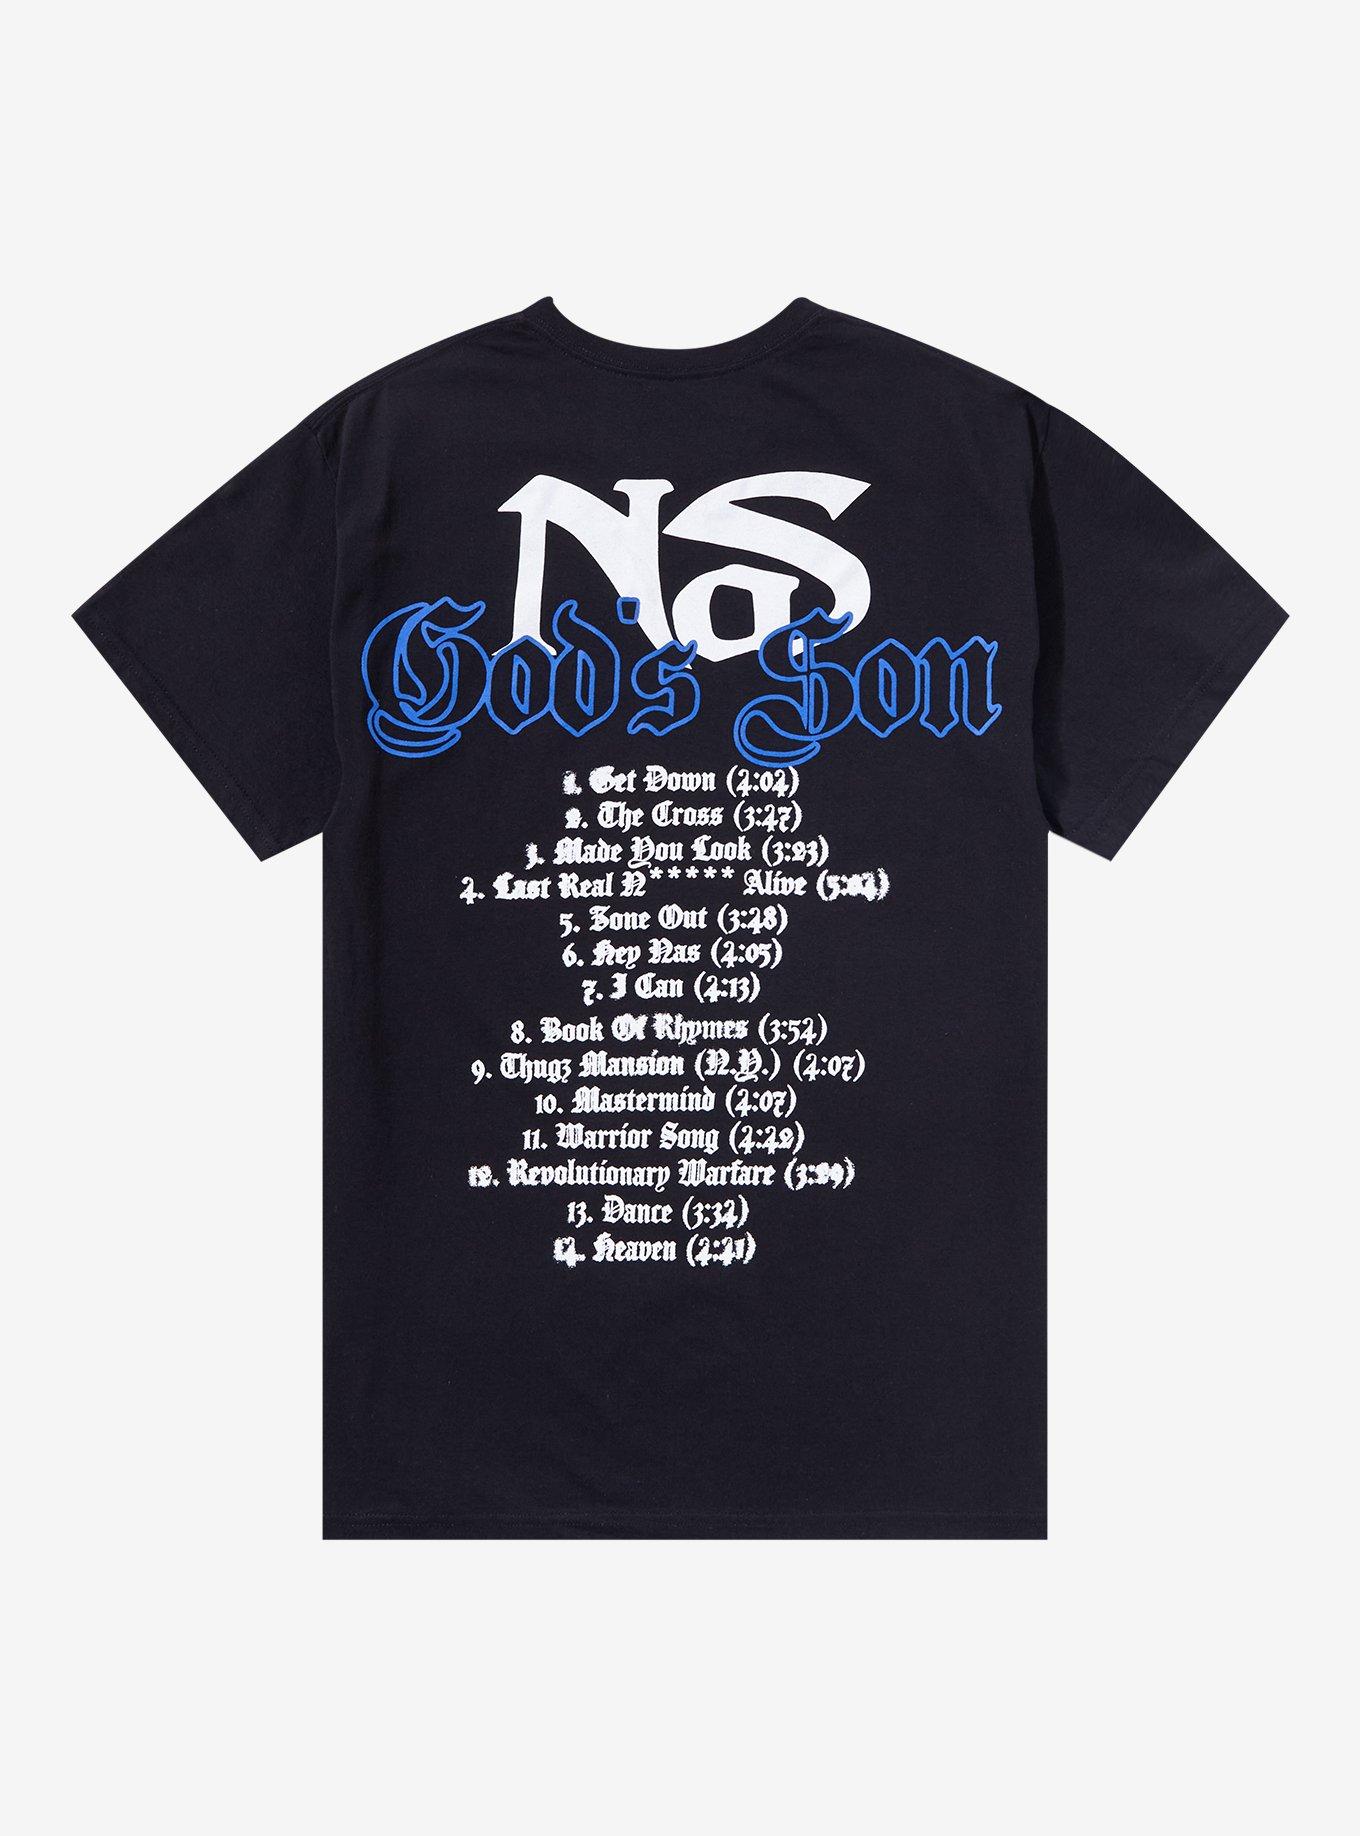 Nas God's Son Tracklist T-Shirt